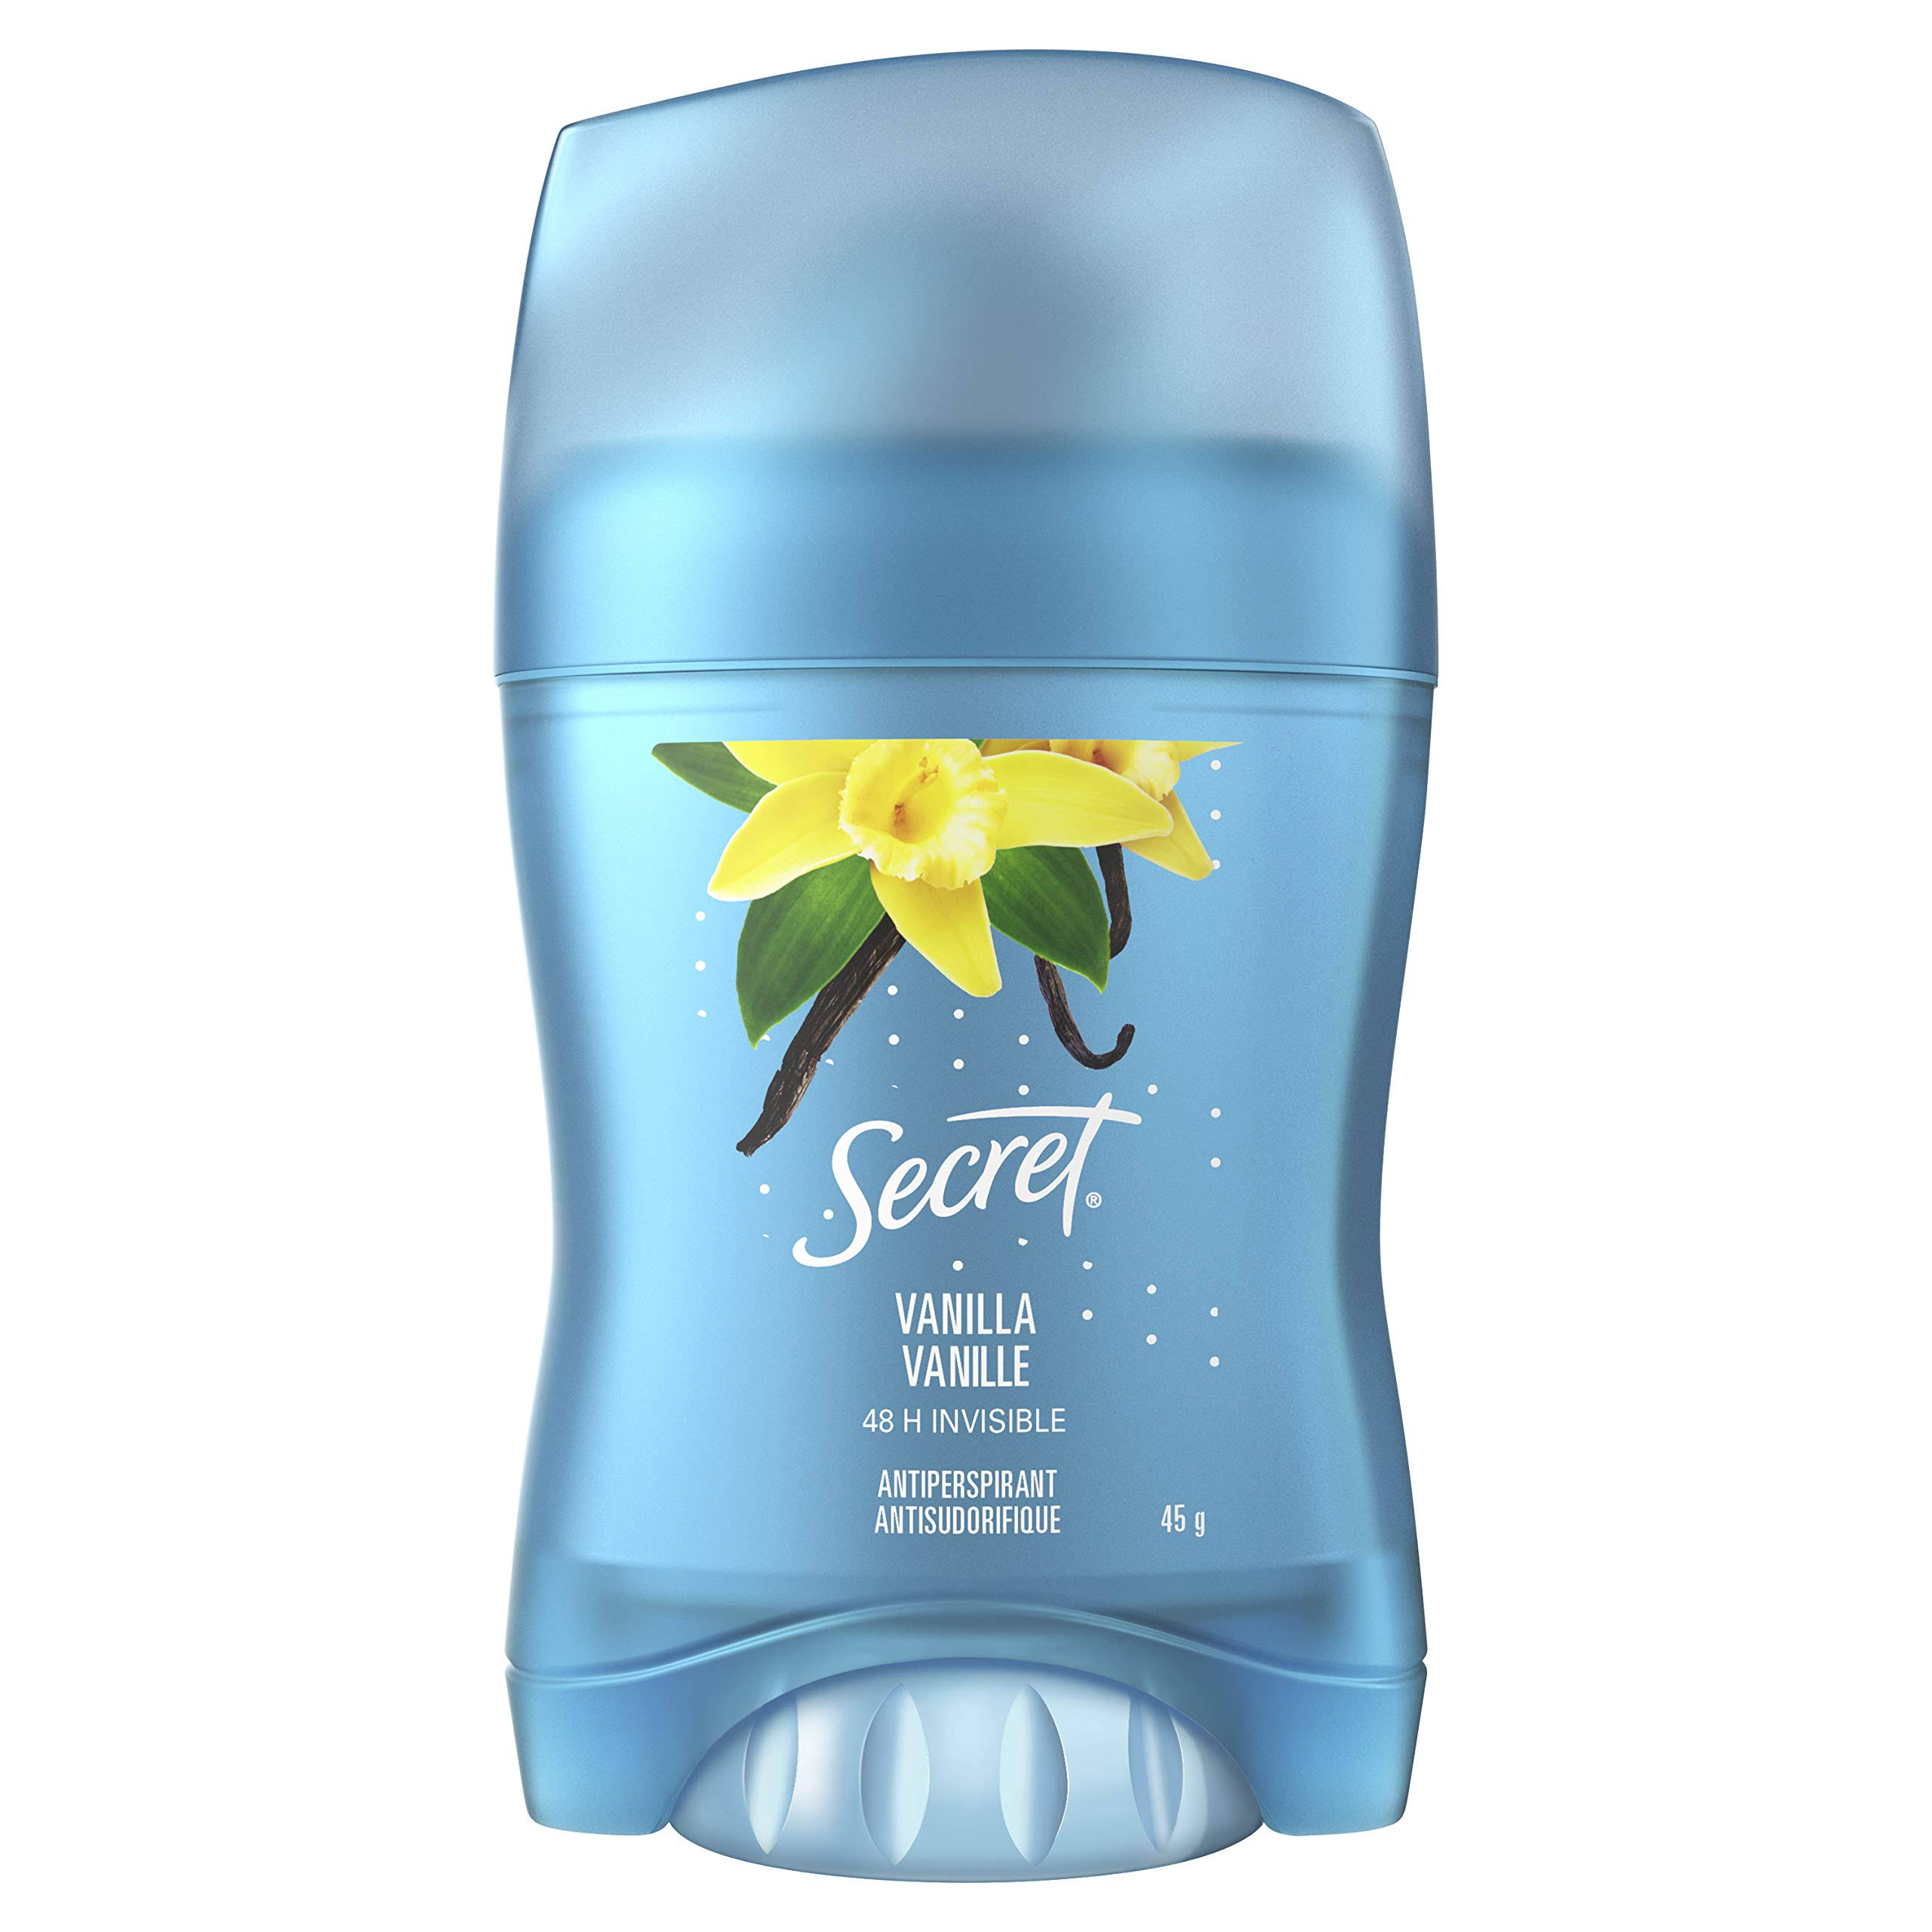 Secret Fresh Antiperspirant and Deodorant Invisible Solid - Vanilla, 45g